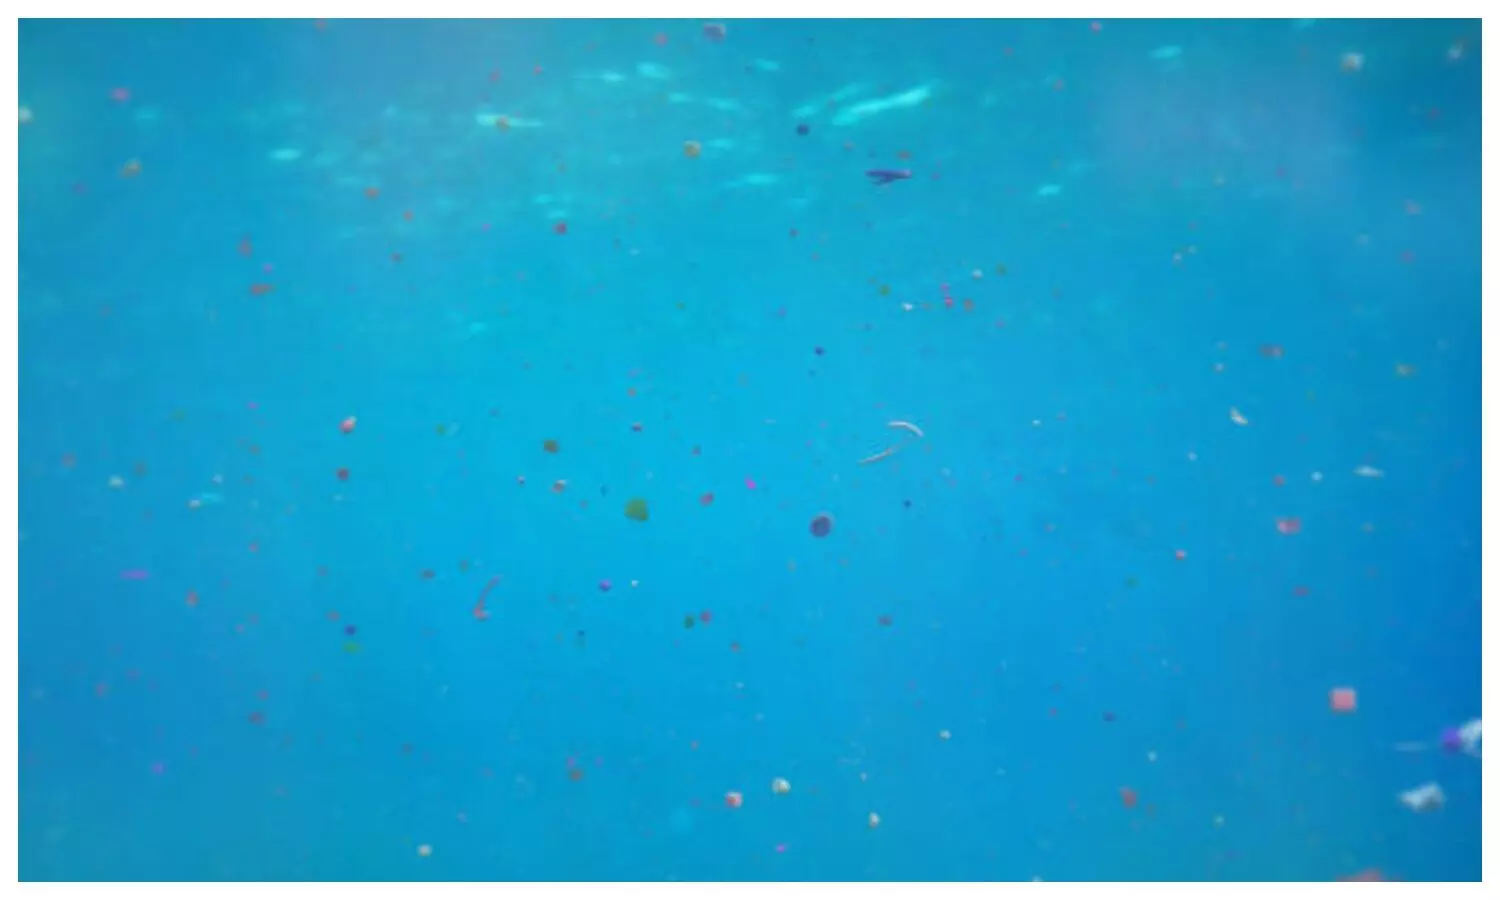 Microplastics in swimming water